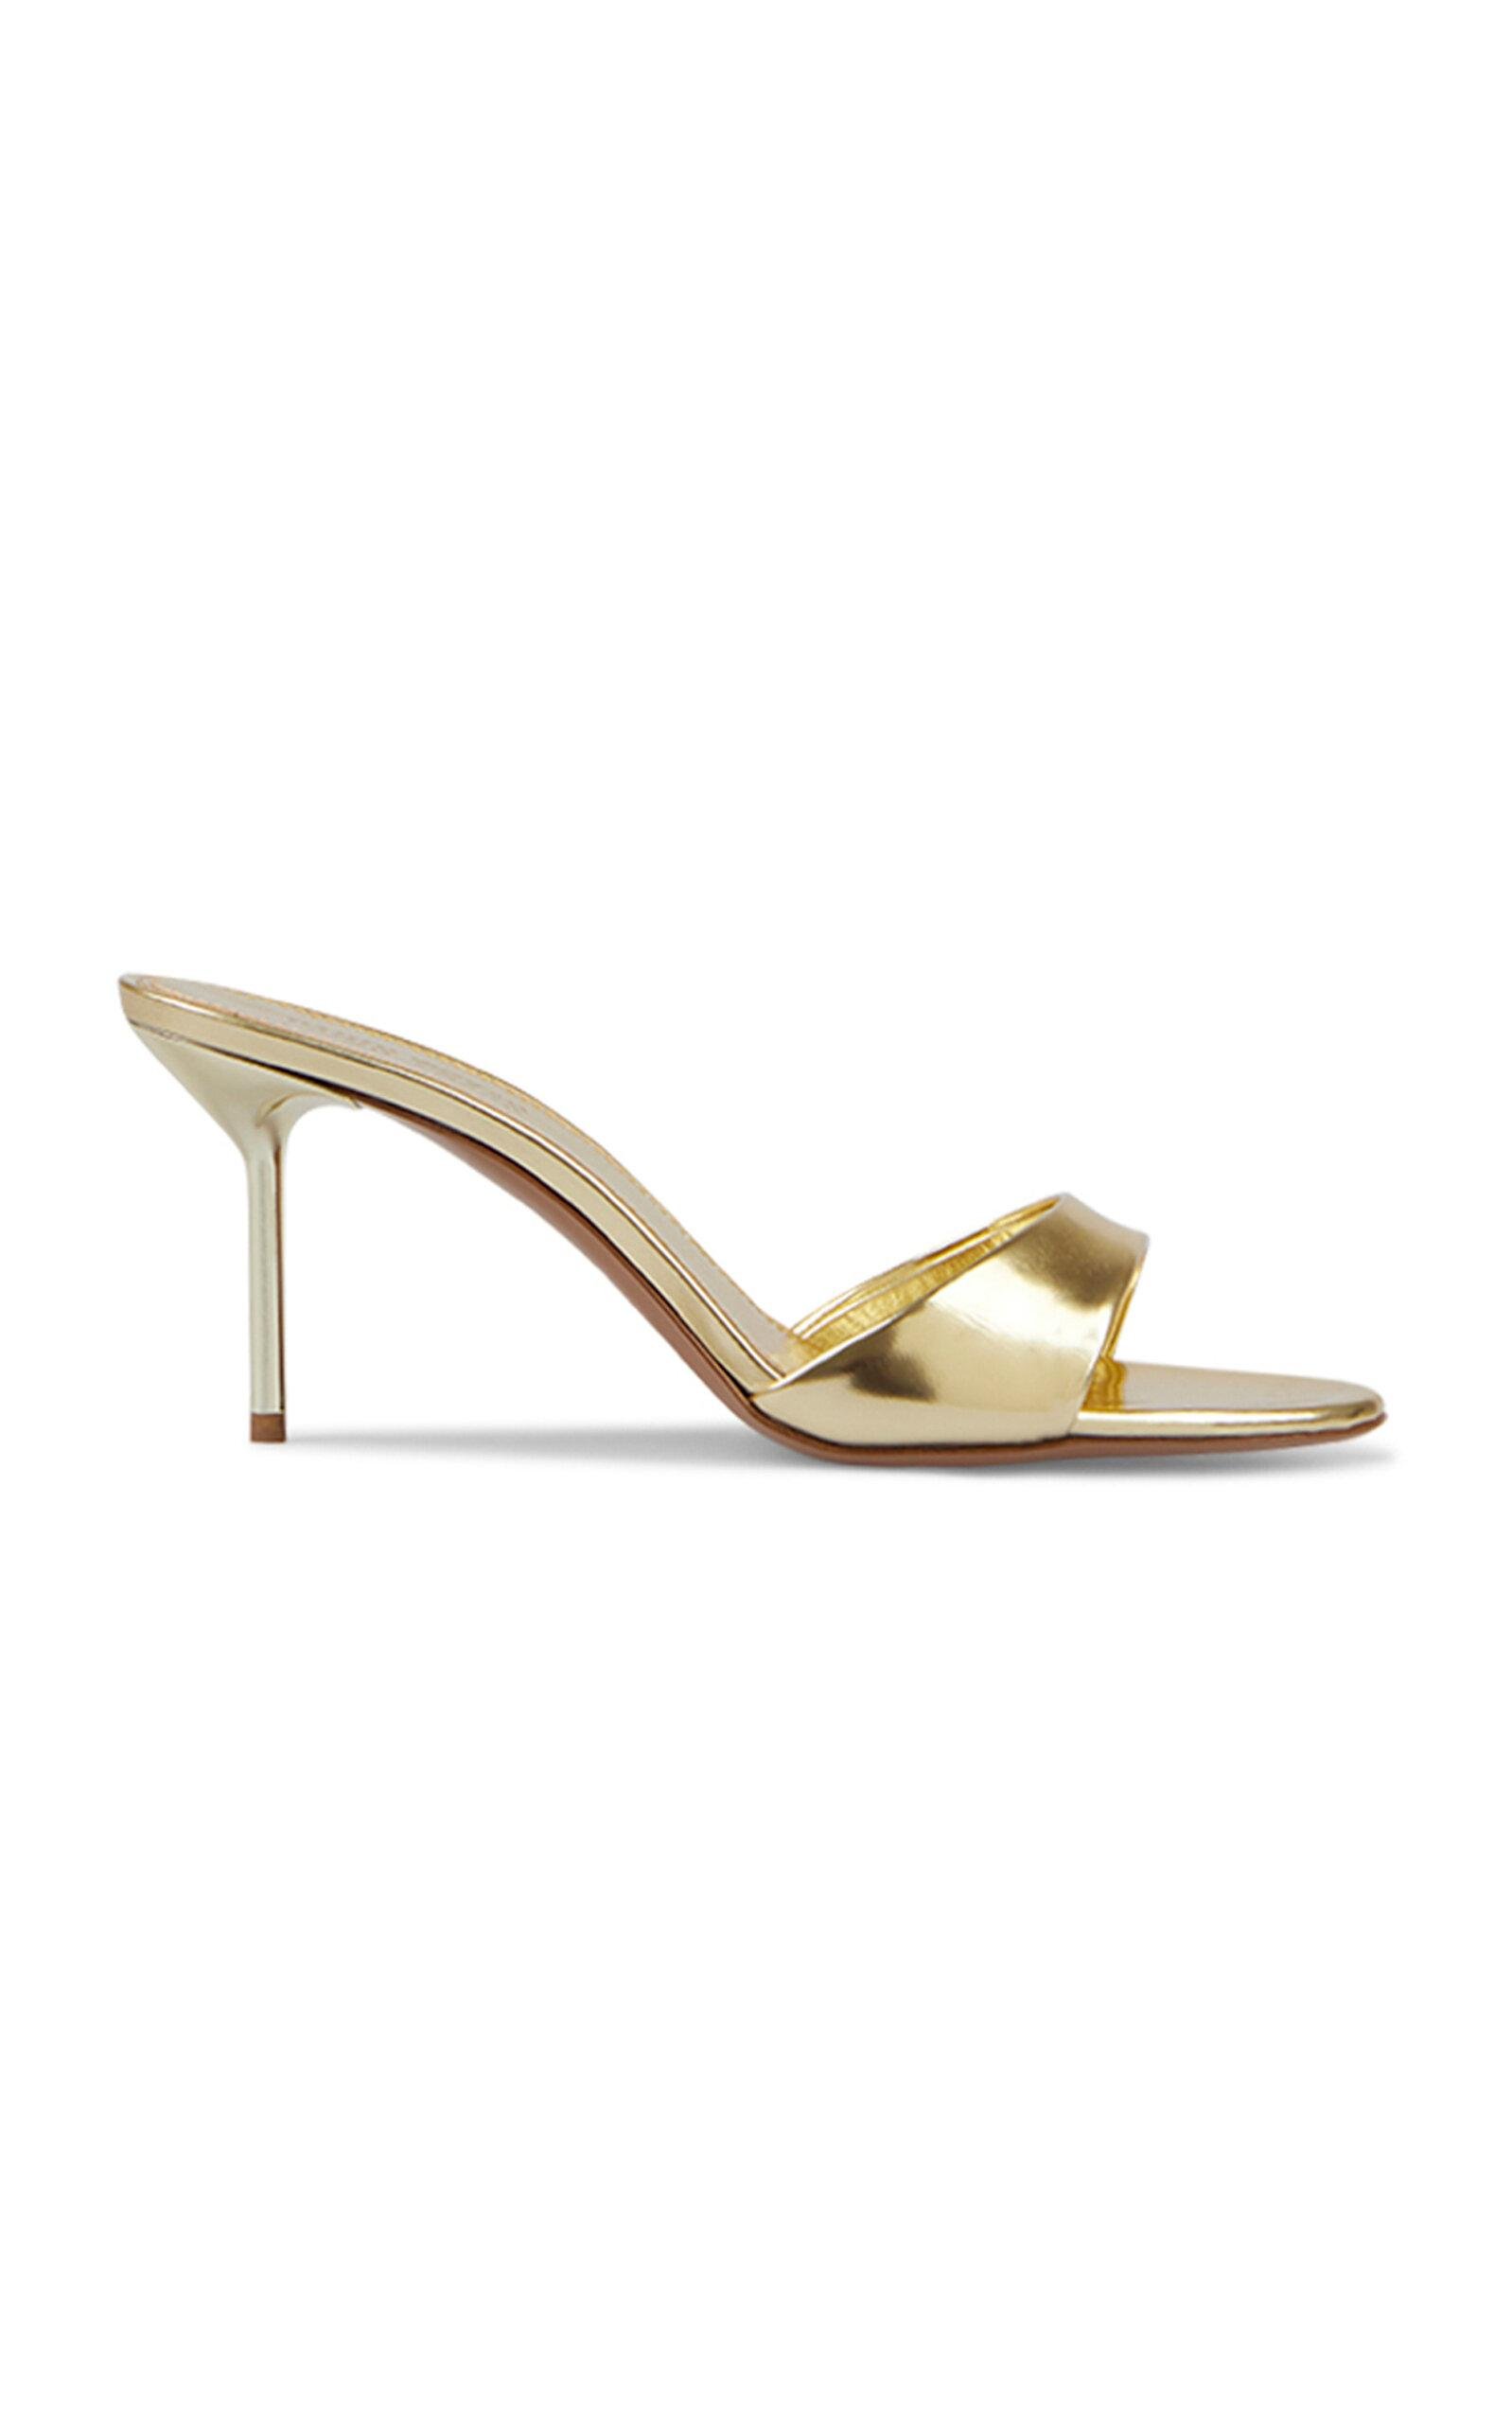 Paris Texas - Lidia Patent Leather Sandals - Gold - IT 37 - Moda Operandi by PARIS TEXAS